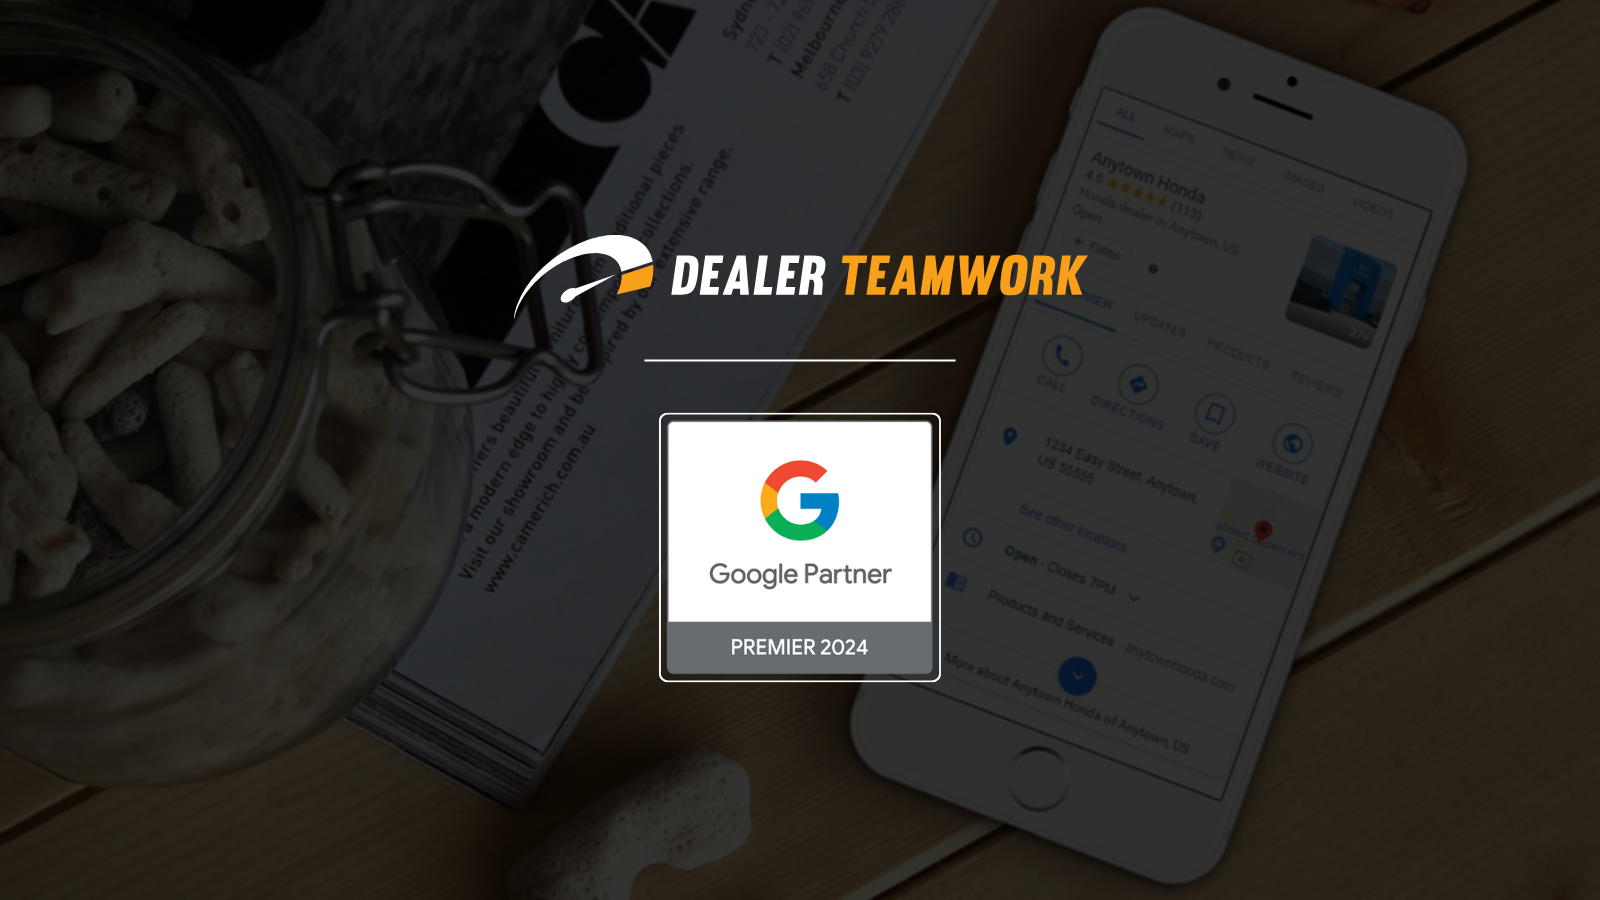 Dealer Teamwork Named Google Premier Partner 2024